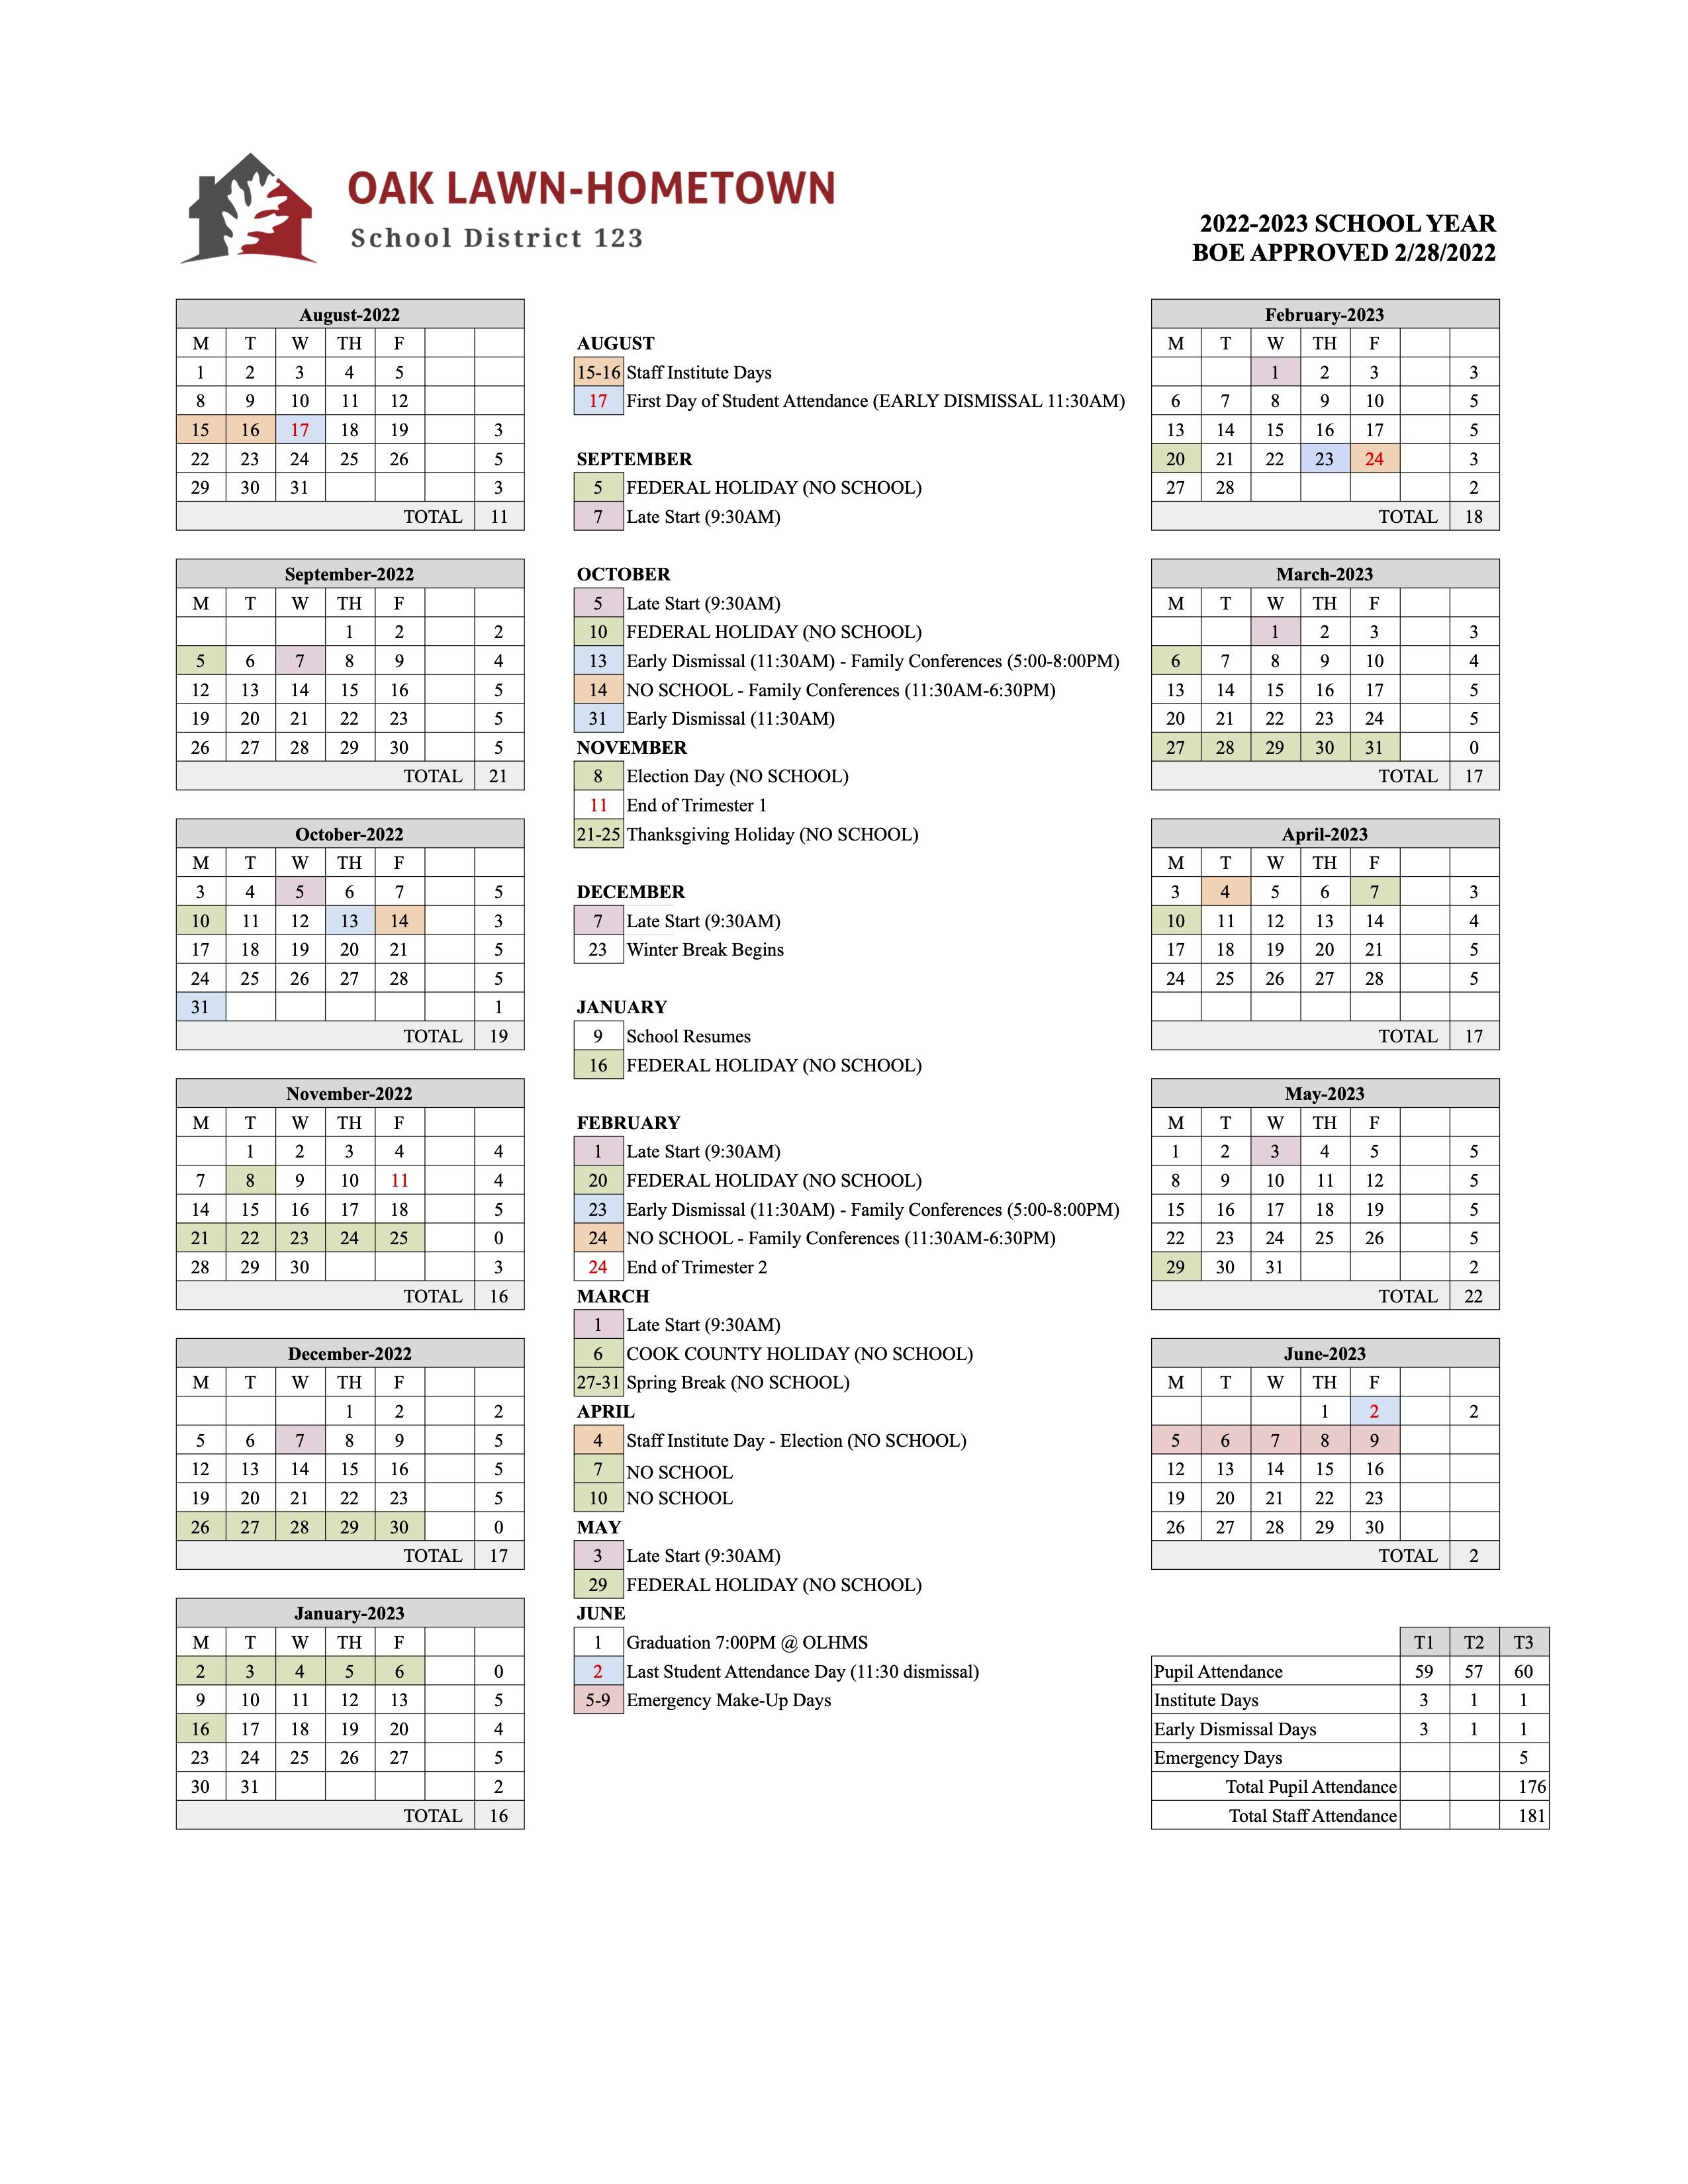 Columbia College Chicago Calendar 2022 2023 Hza9Hob2C-Jkgm